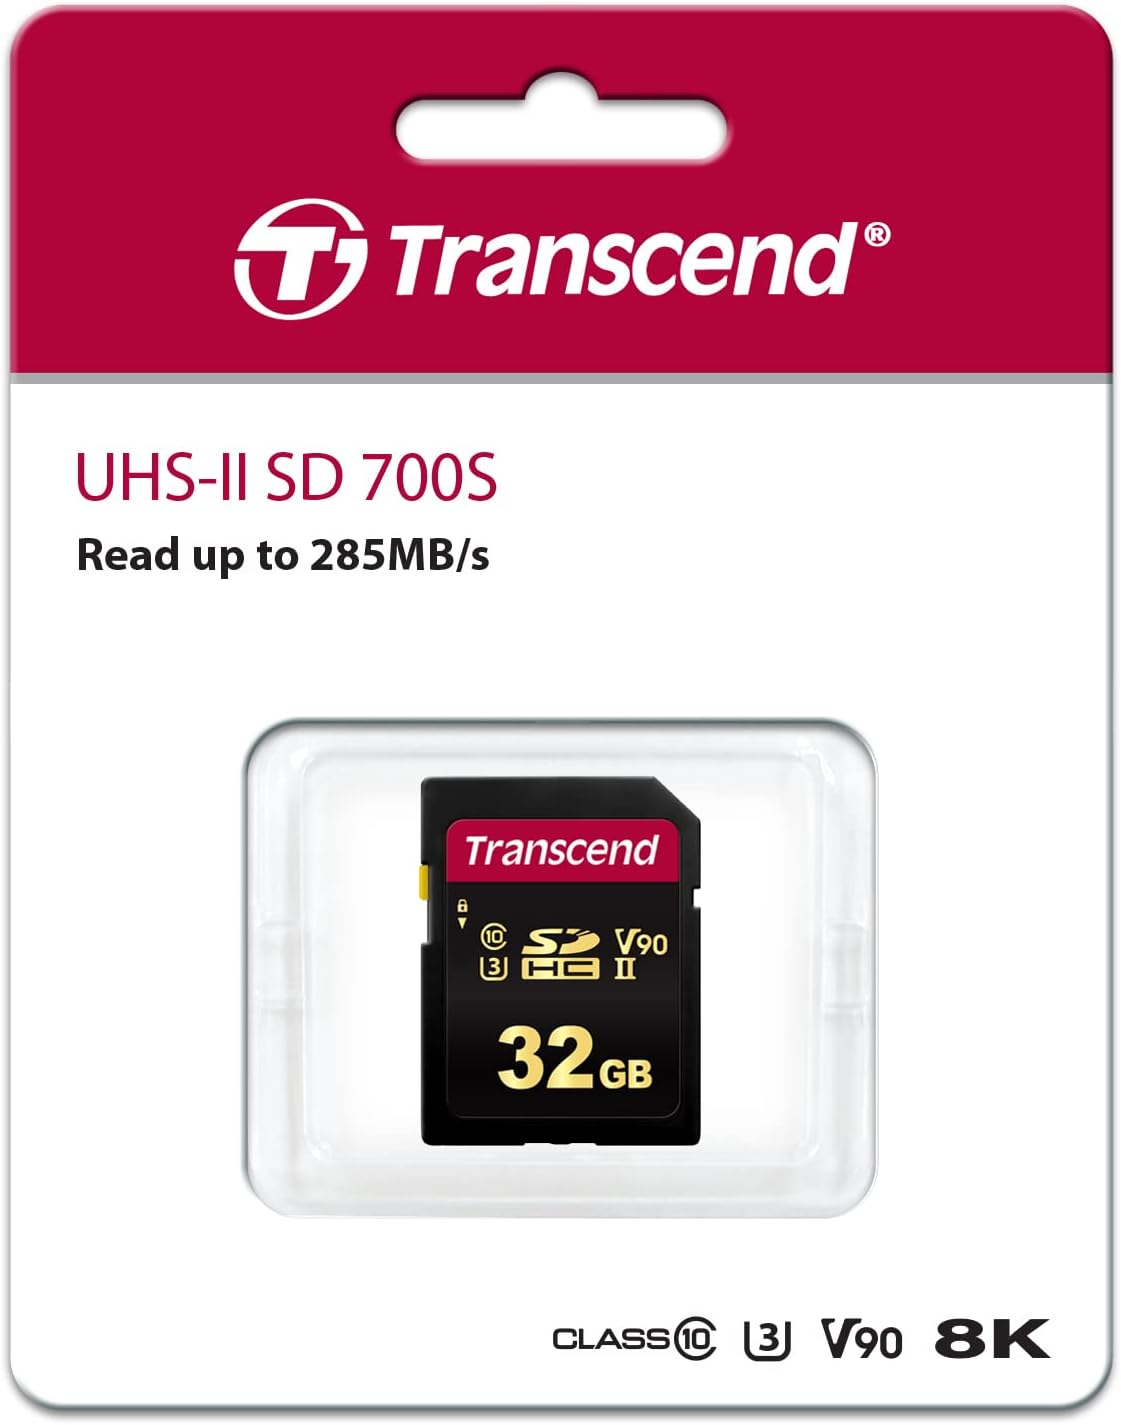 TRANSCEND 700S 32GB UHS-II U3 V90 CLASS 10 SDXC CARD - MLC